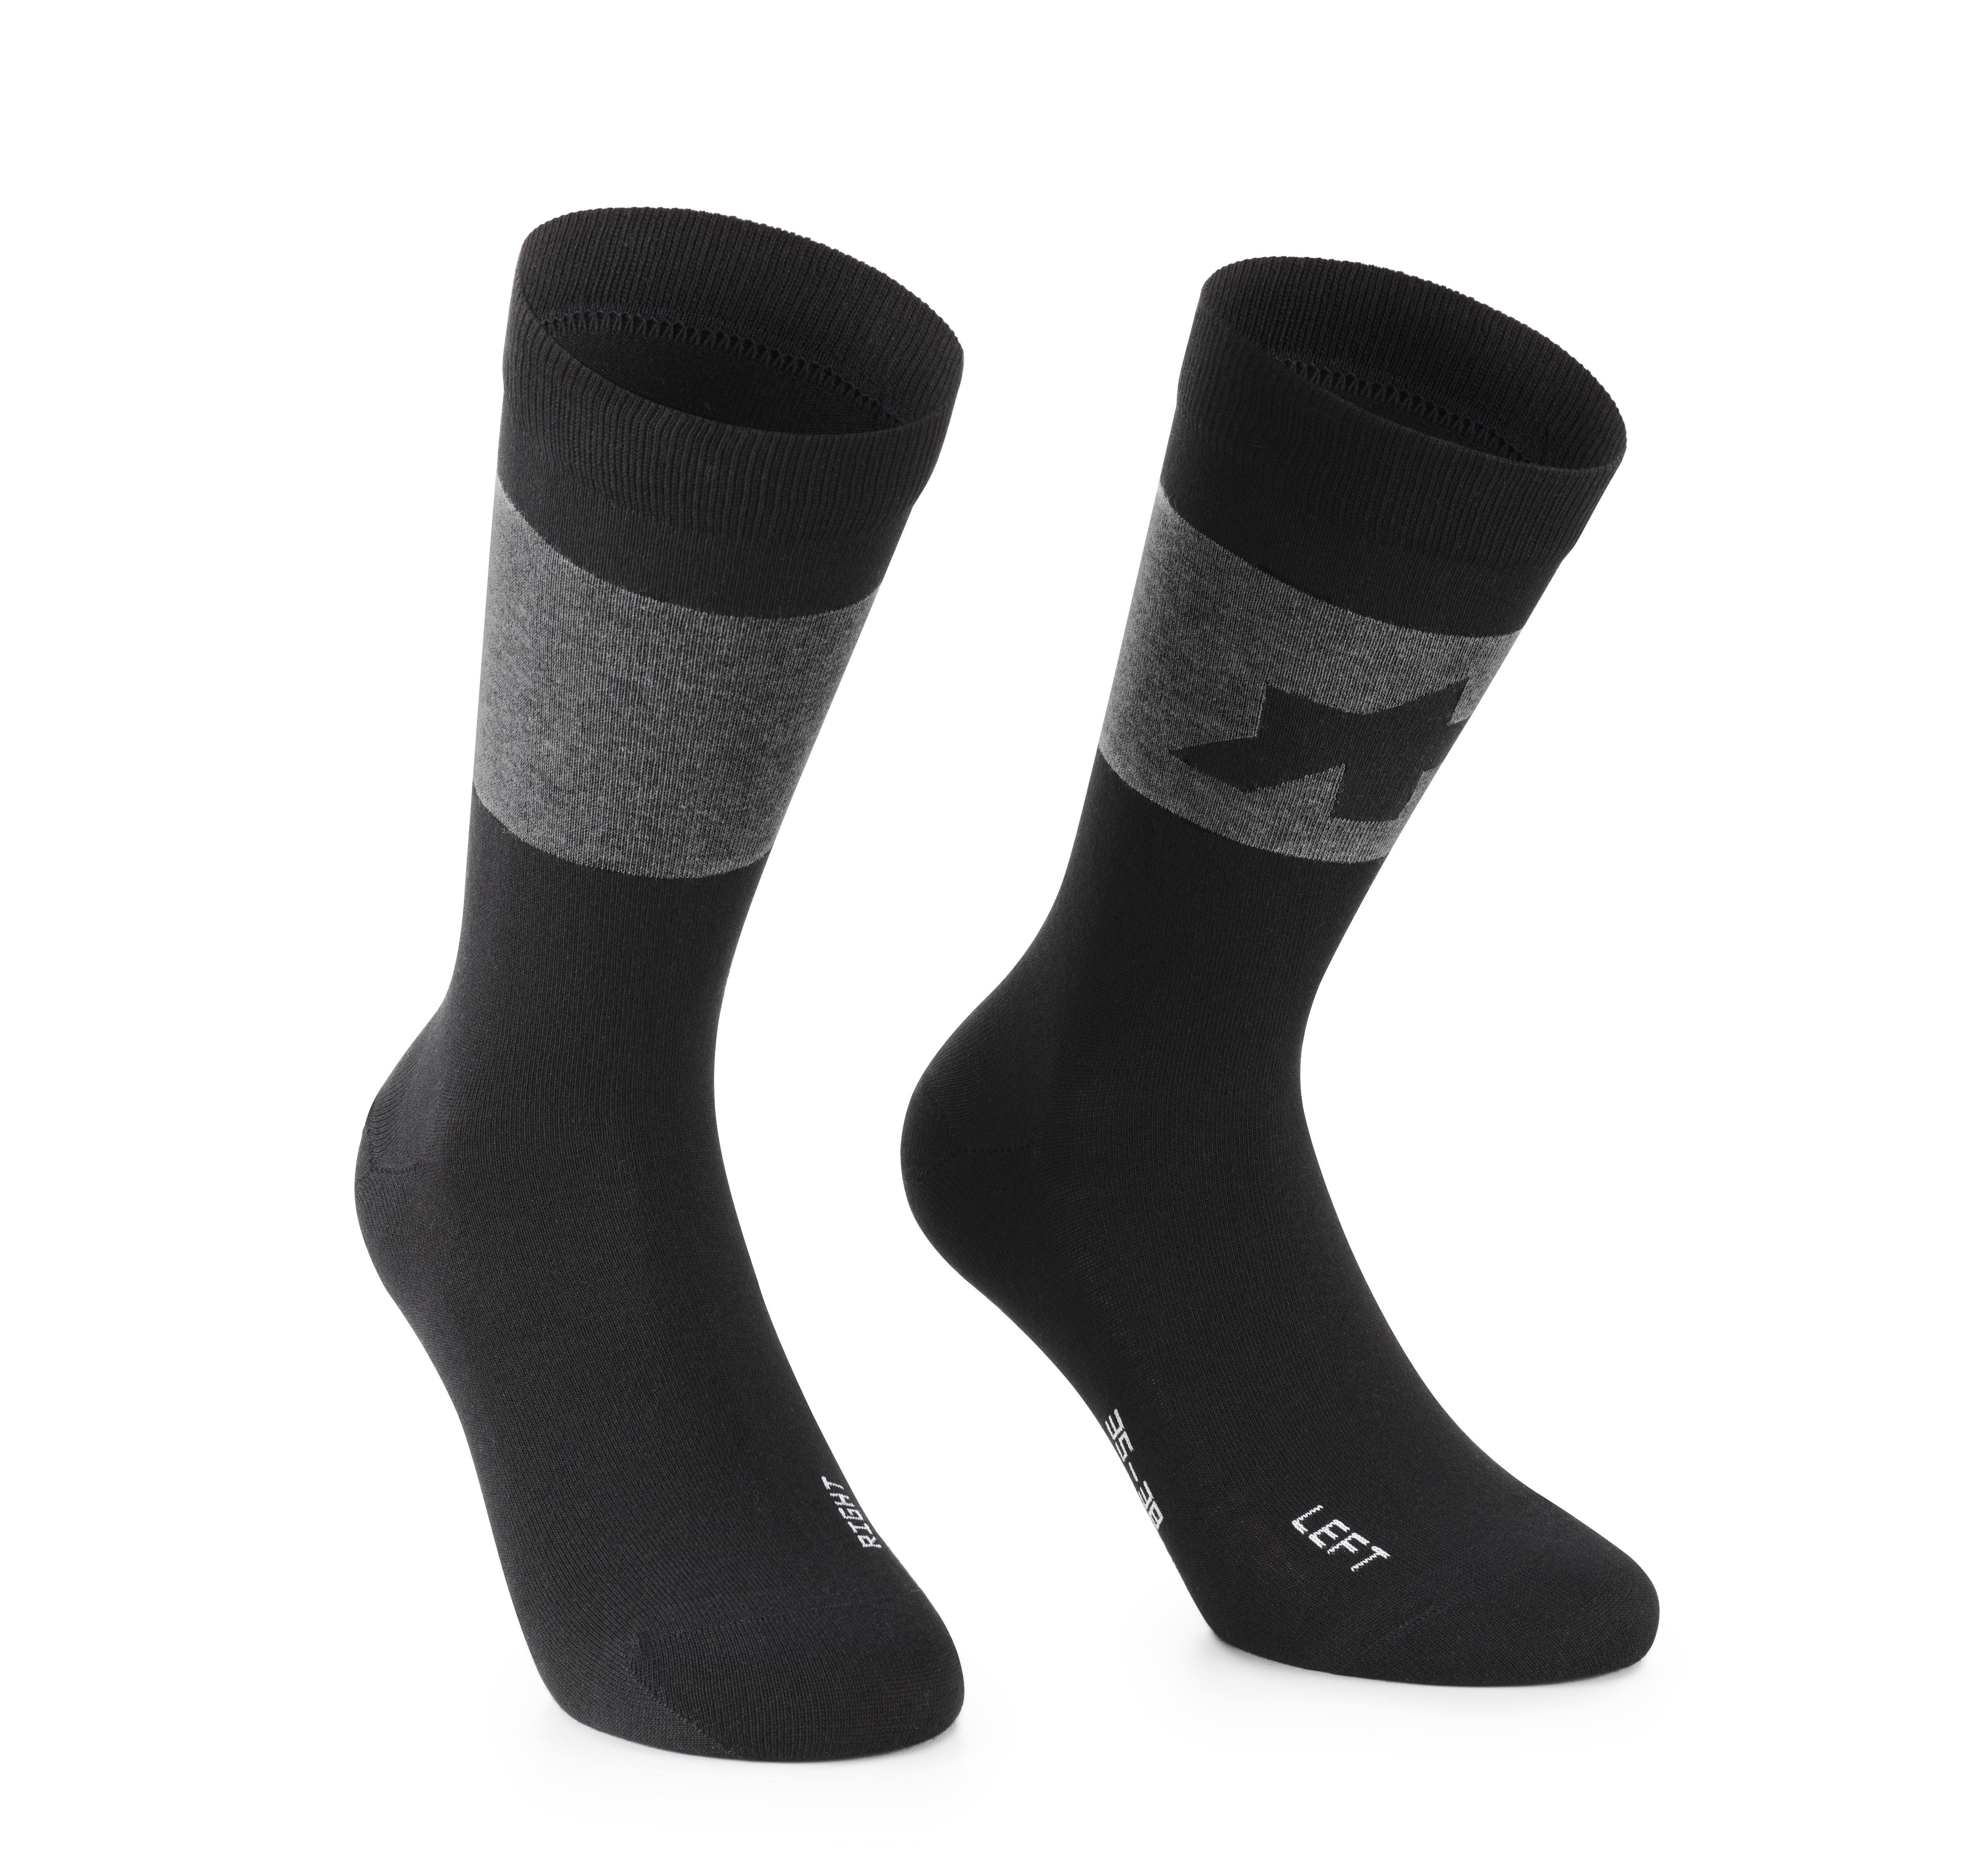 Носки ASSOS Signature Socks Evo, мужские, черные, I/40-43 фото 